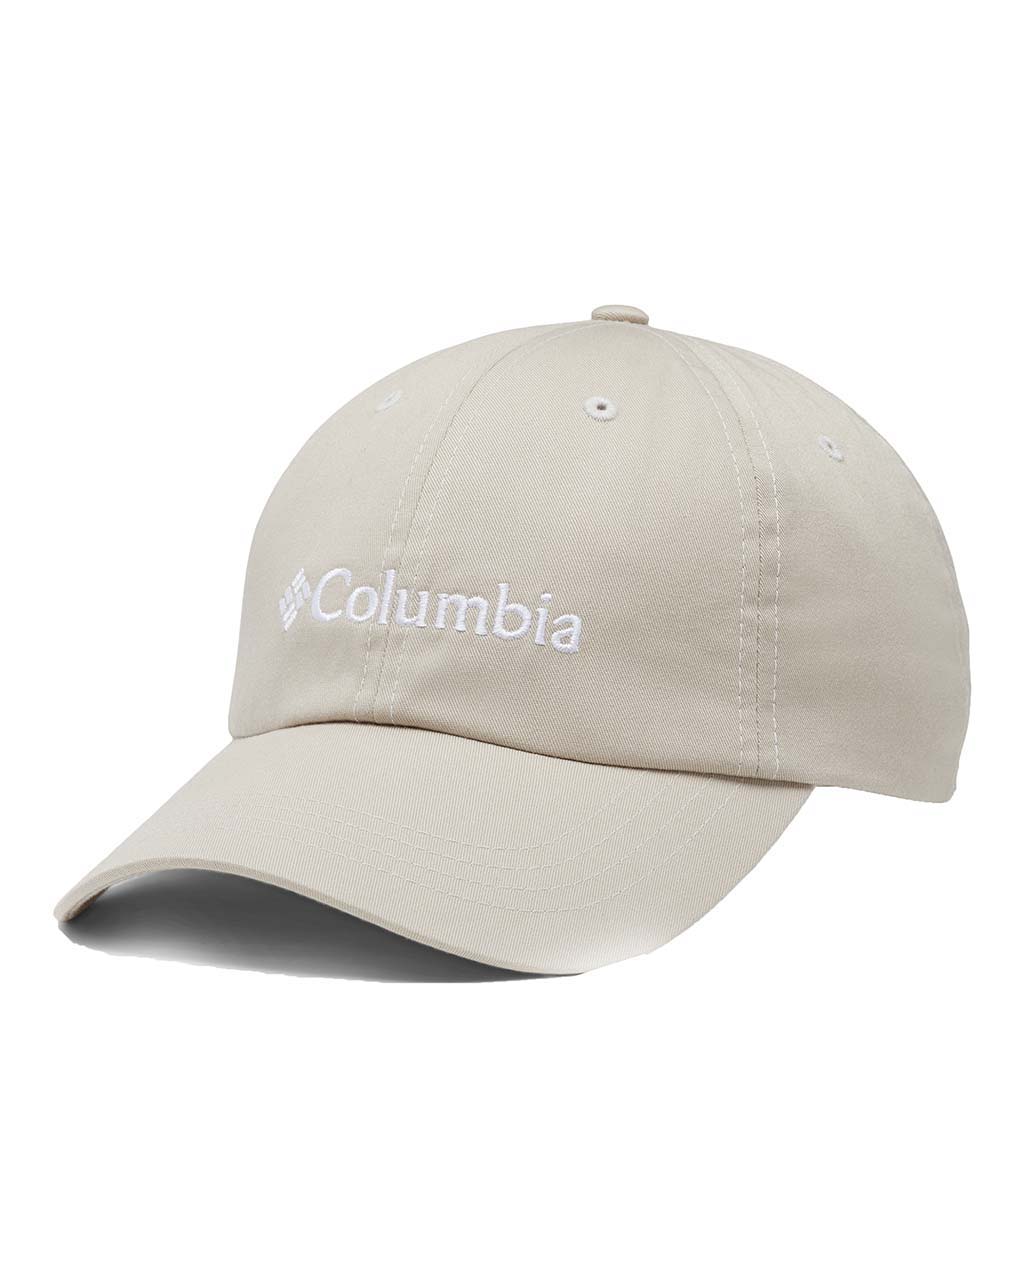 Columbia ROC II Ball Cap Fossil/White